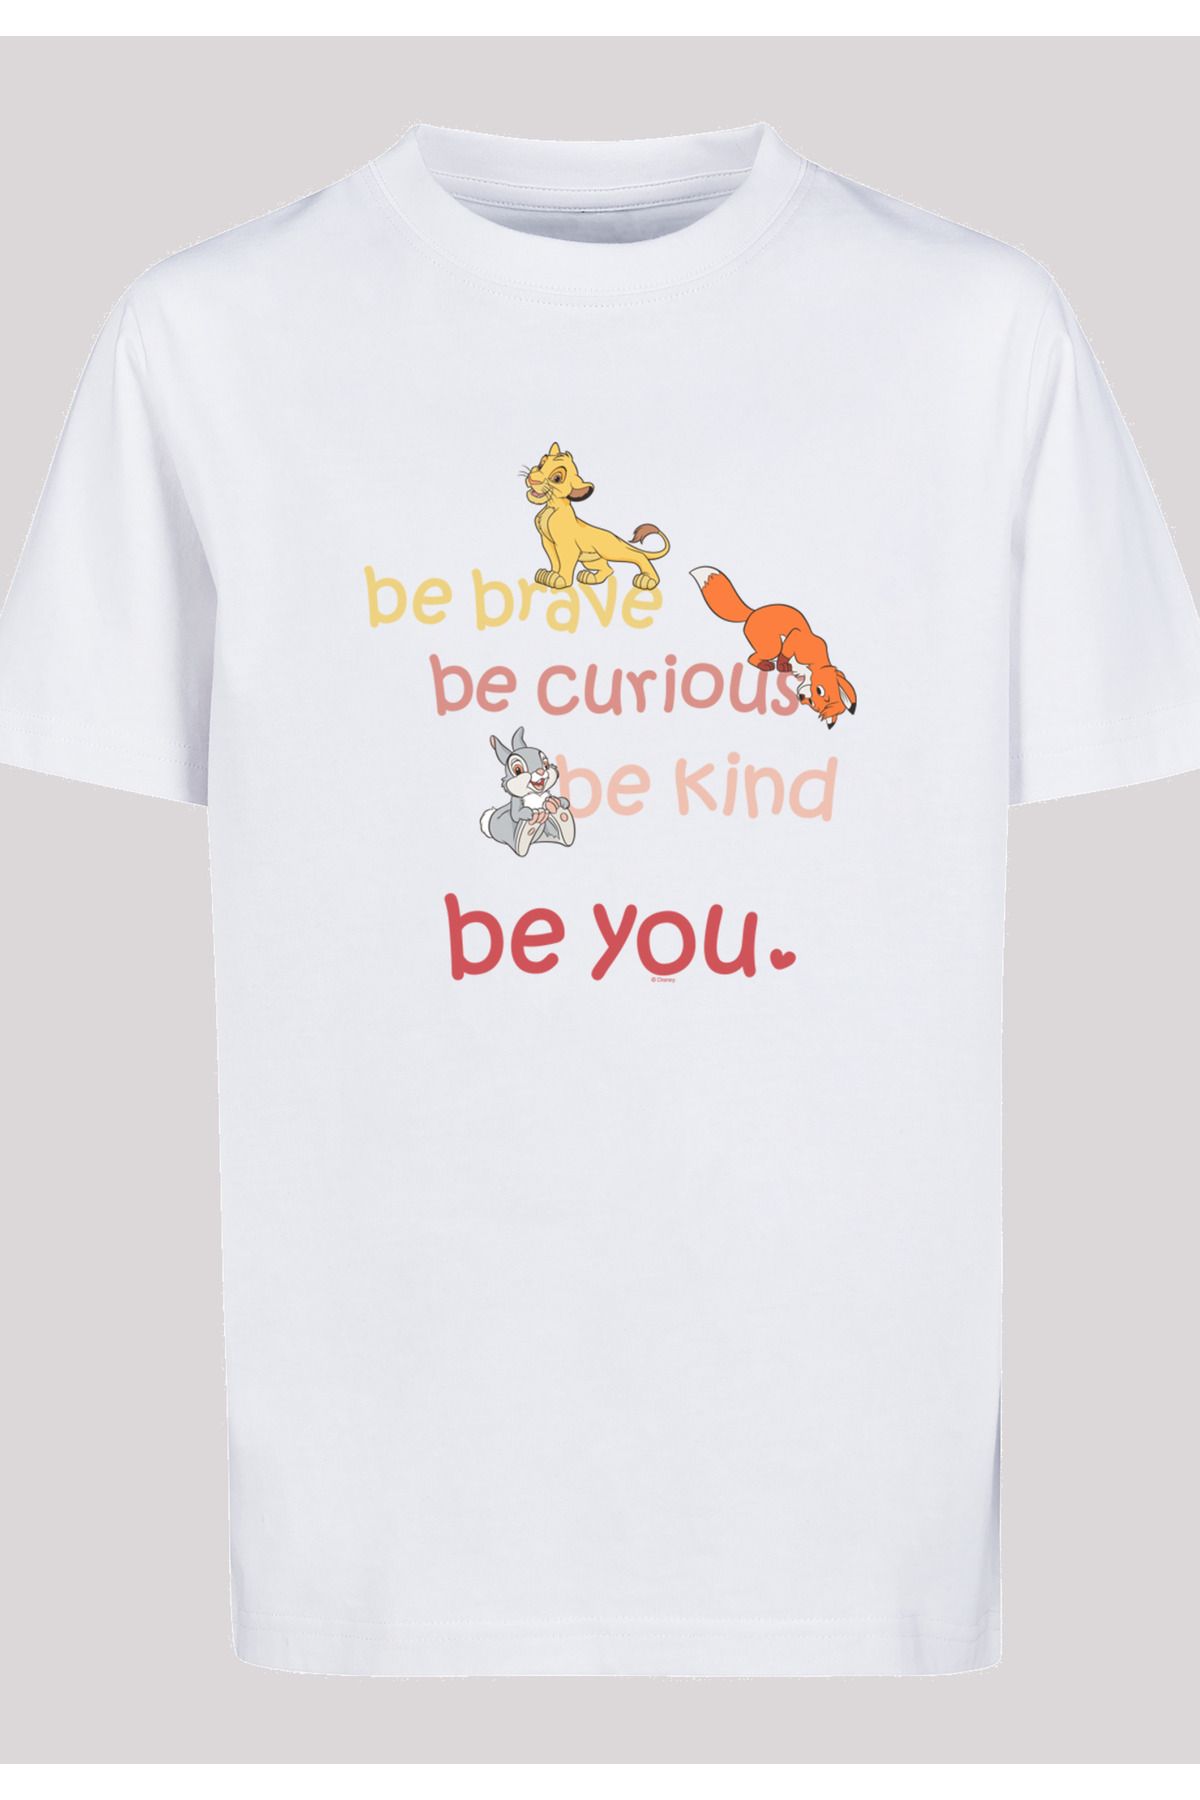 F4NT4STIC Kinder Disney T-Shirt Basic Be Kids Be - Brave Curious mit Trendyol